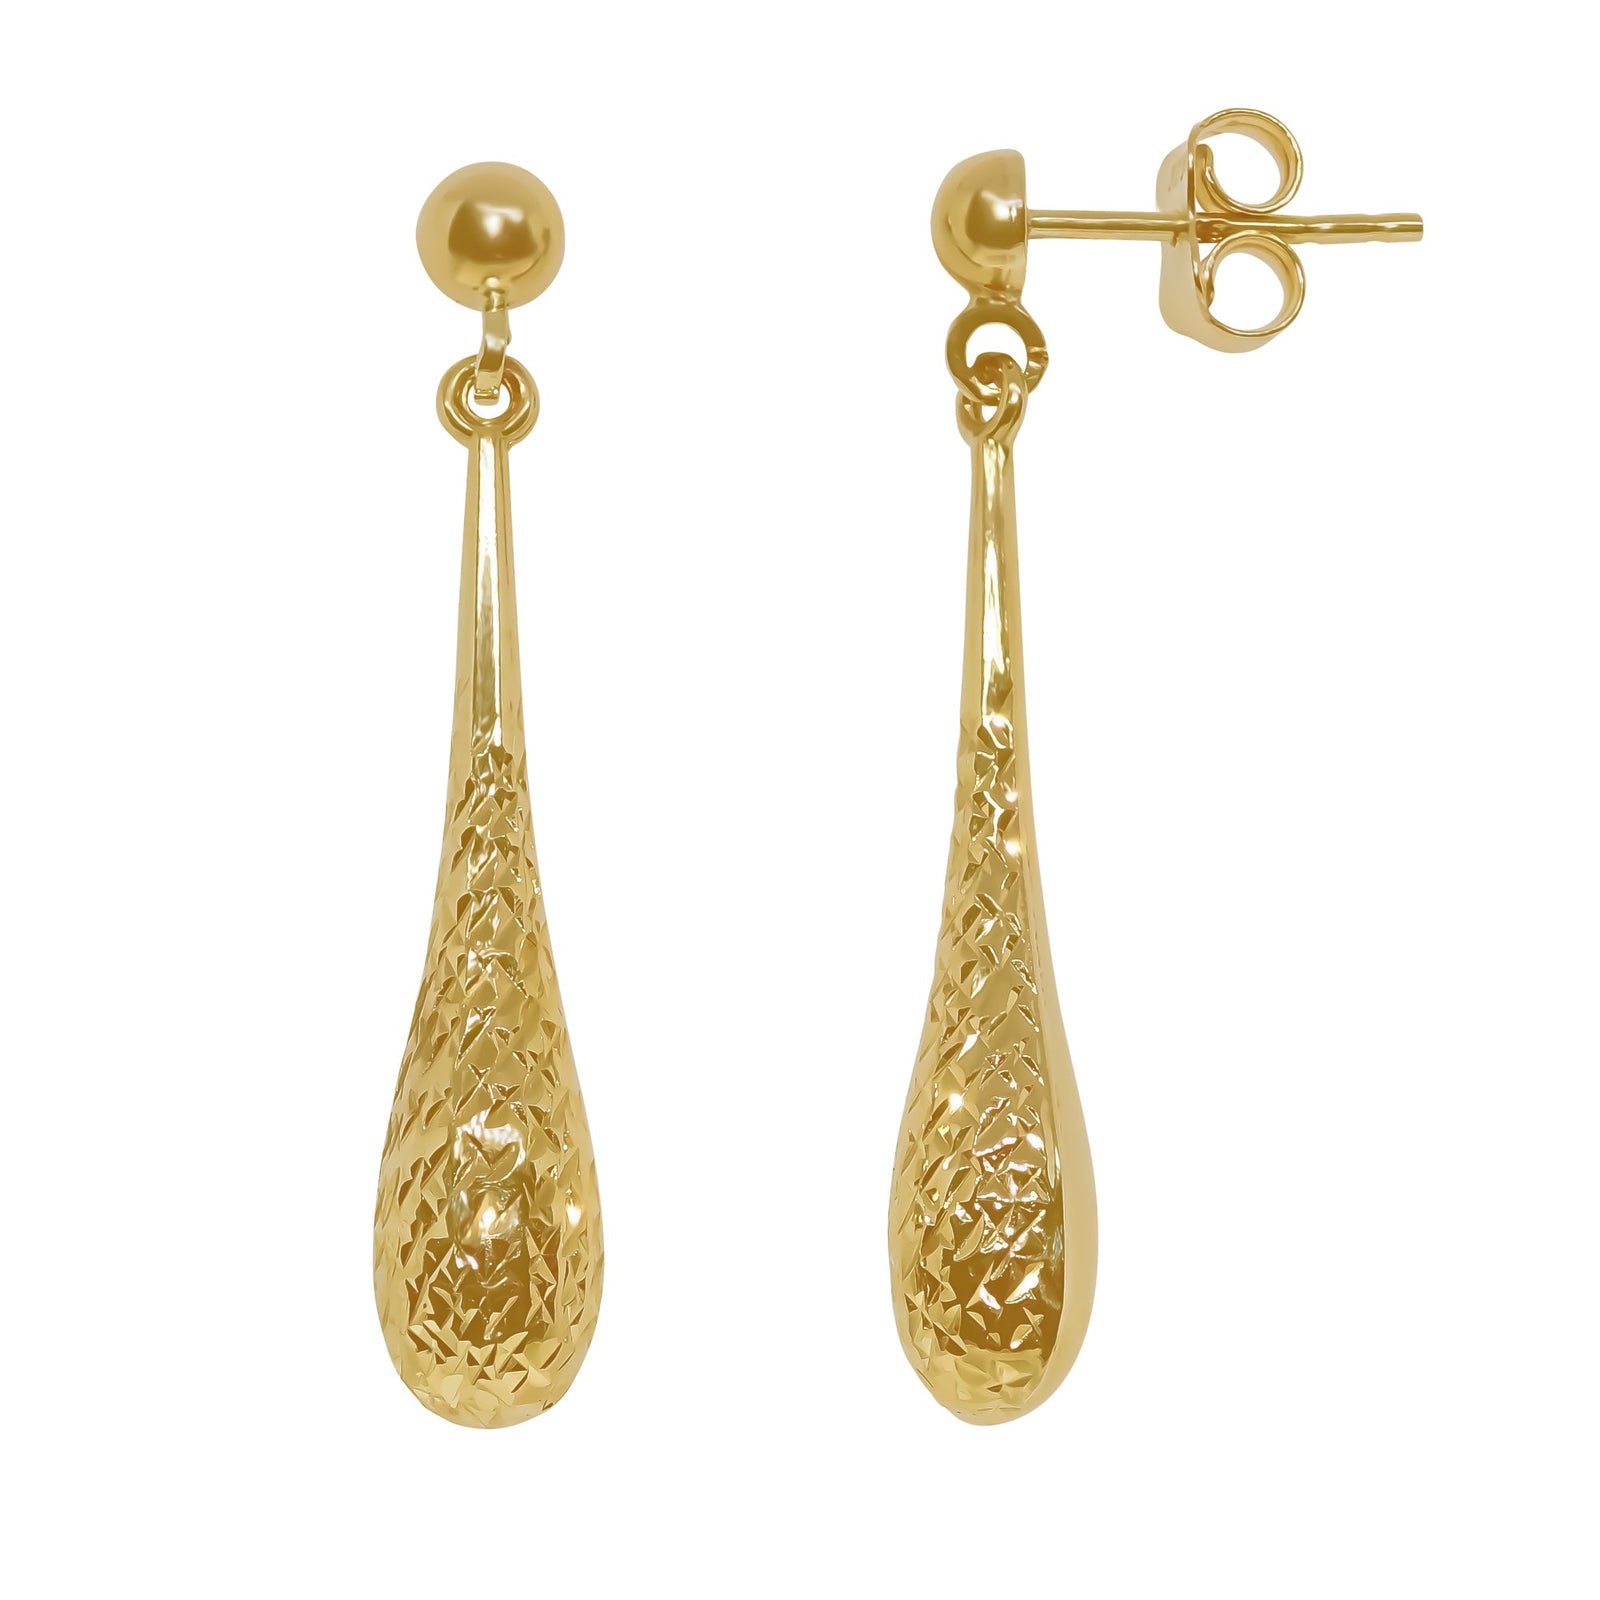 9ct gold 26mm patterned drop earrings